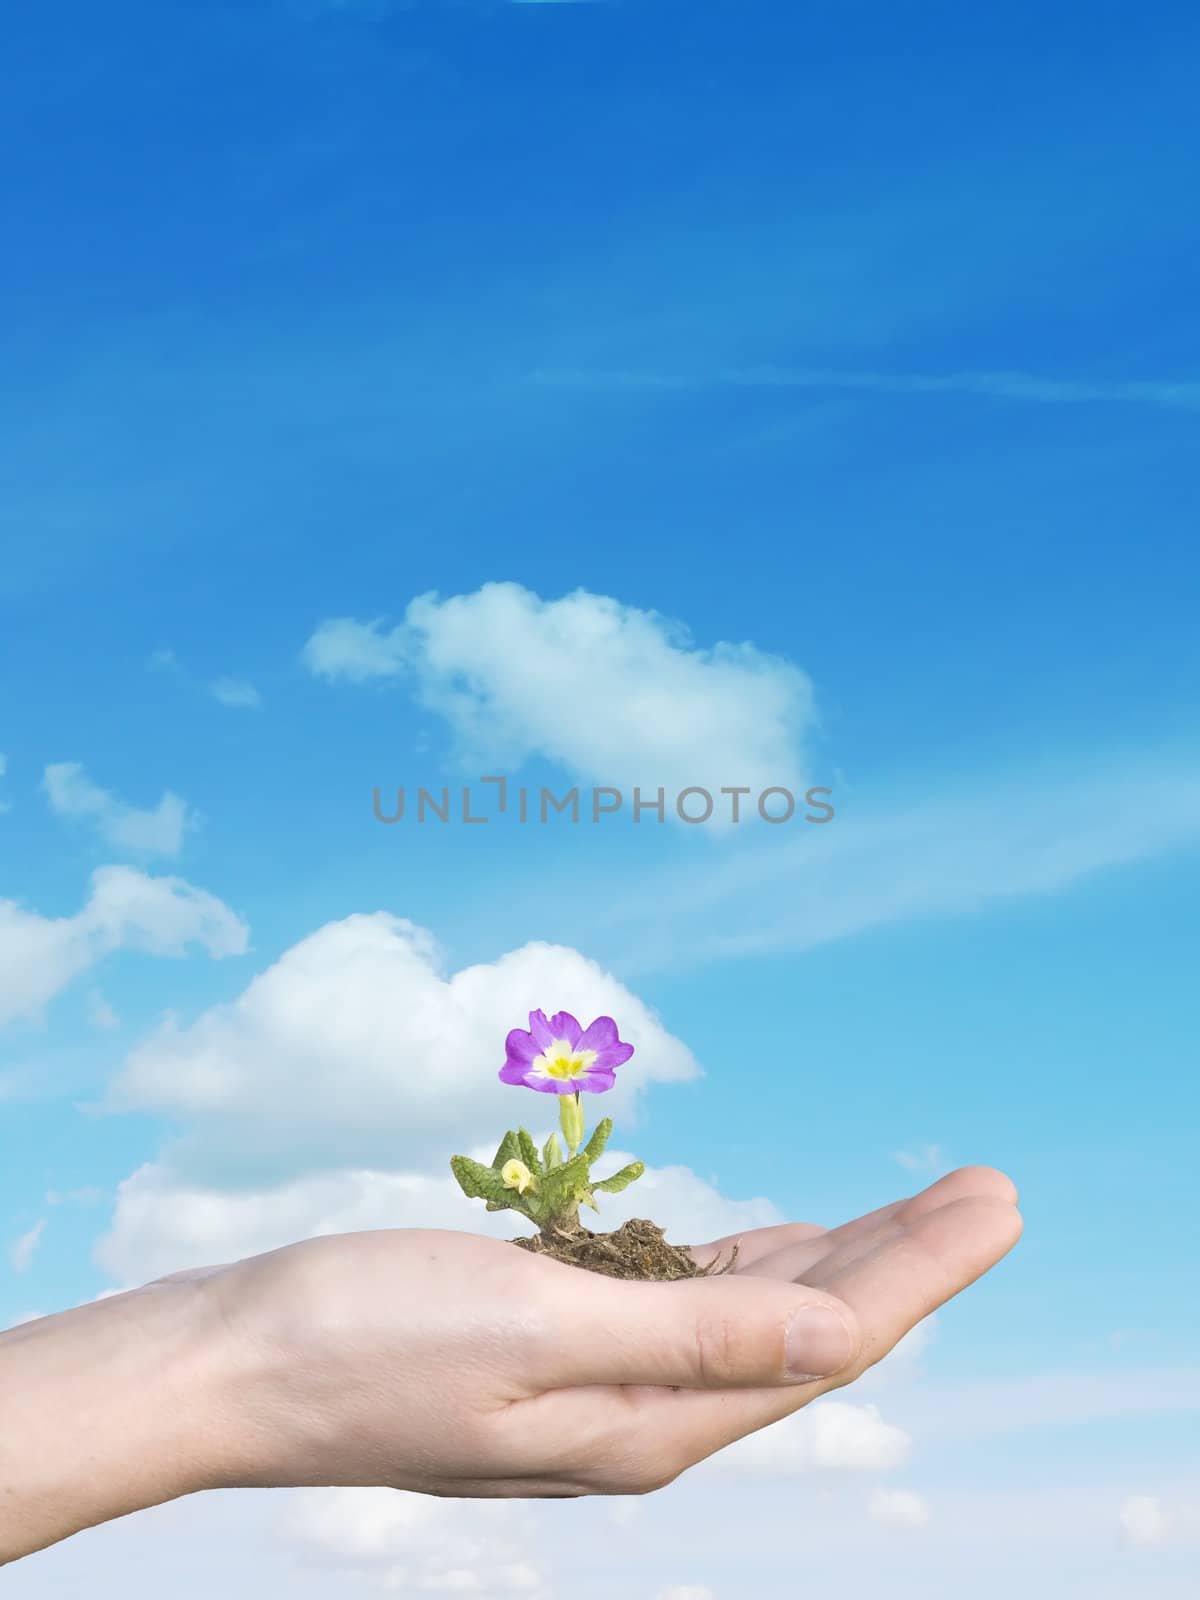 flower in hand on blu sky background